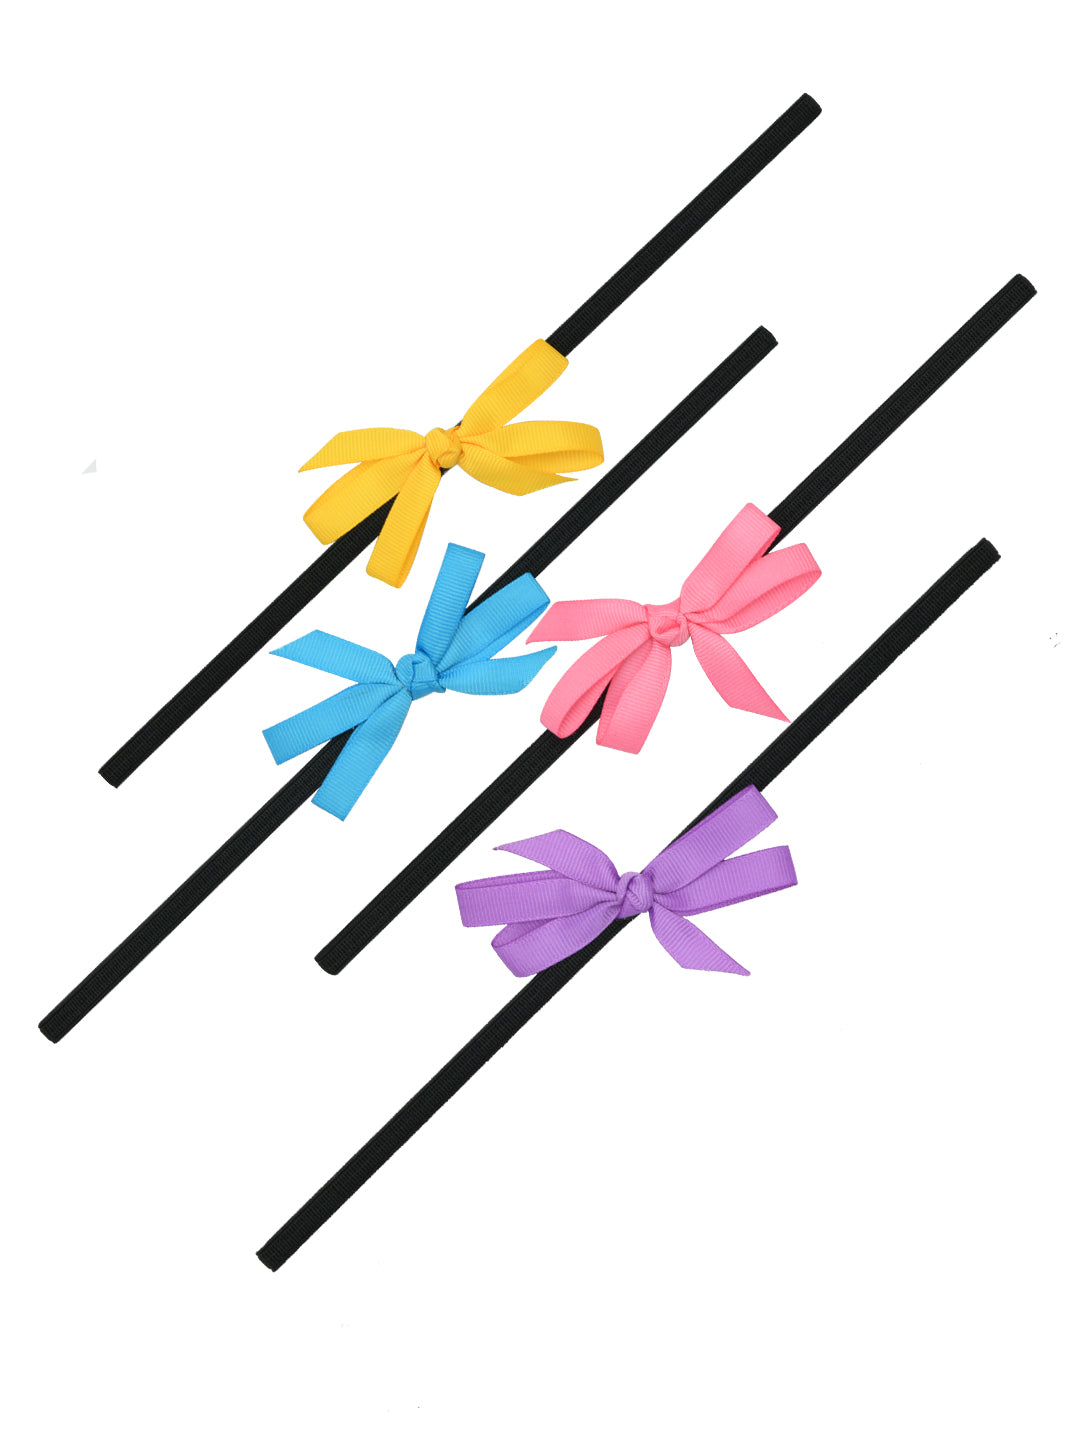 Pack of 4 Multicolor Ribbon Headbands for Girls